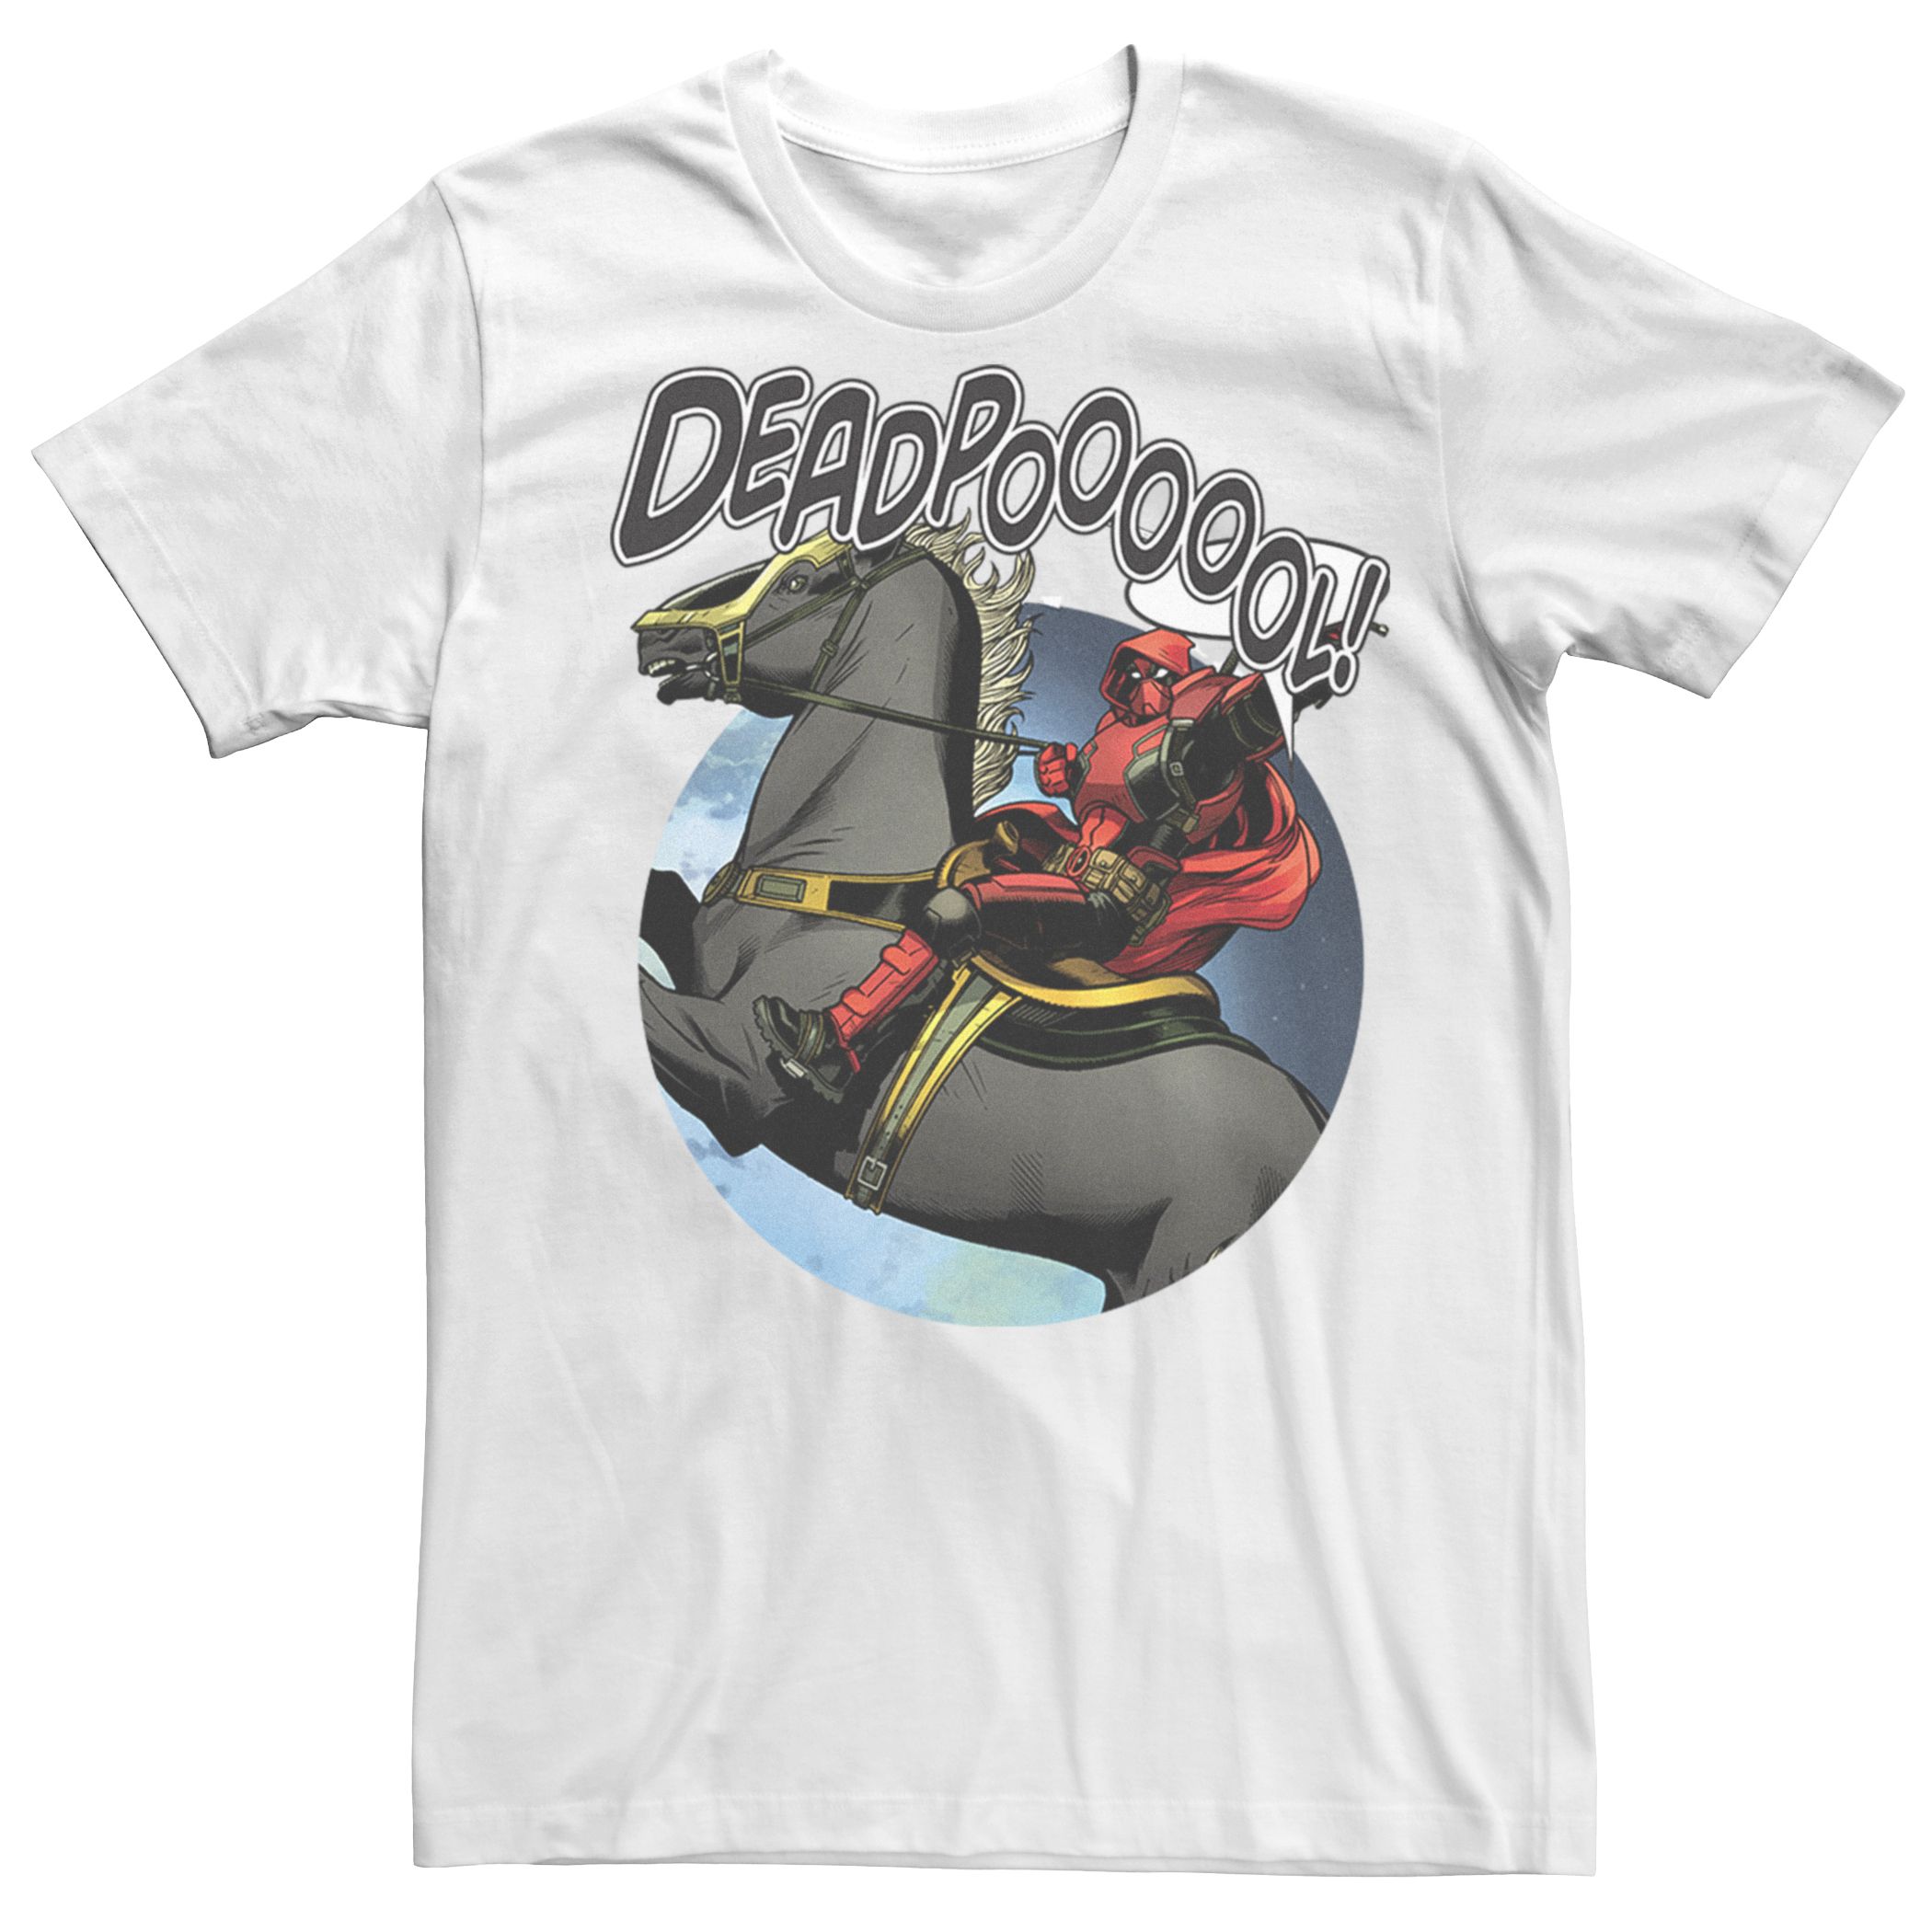 Мужская футболка с изображением лошади Дэдпула и комиксов Marvel Licensed Character